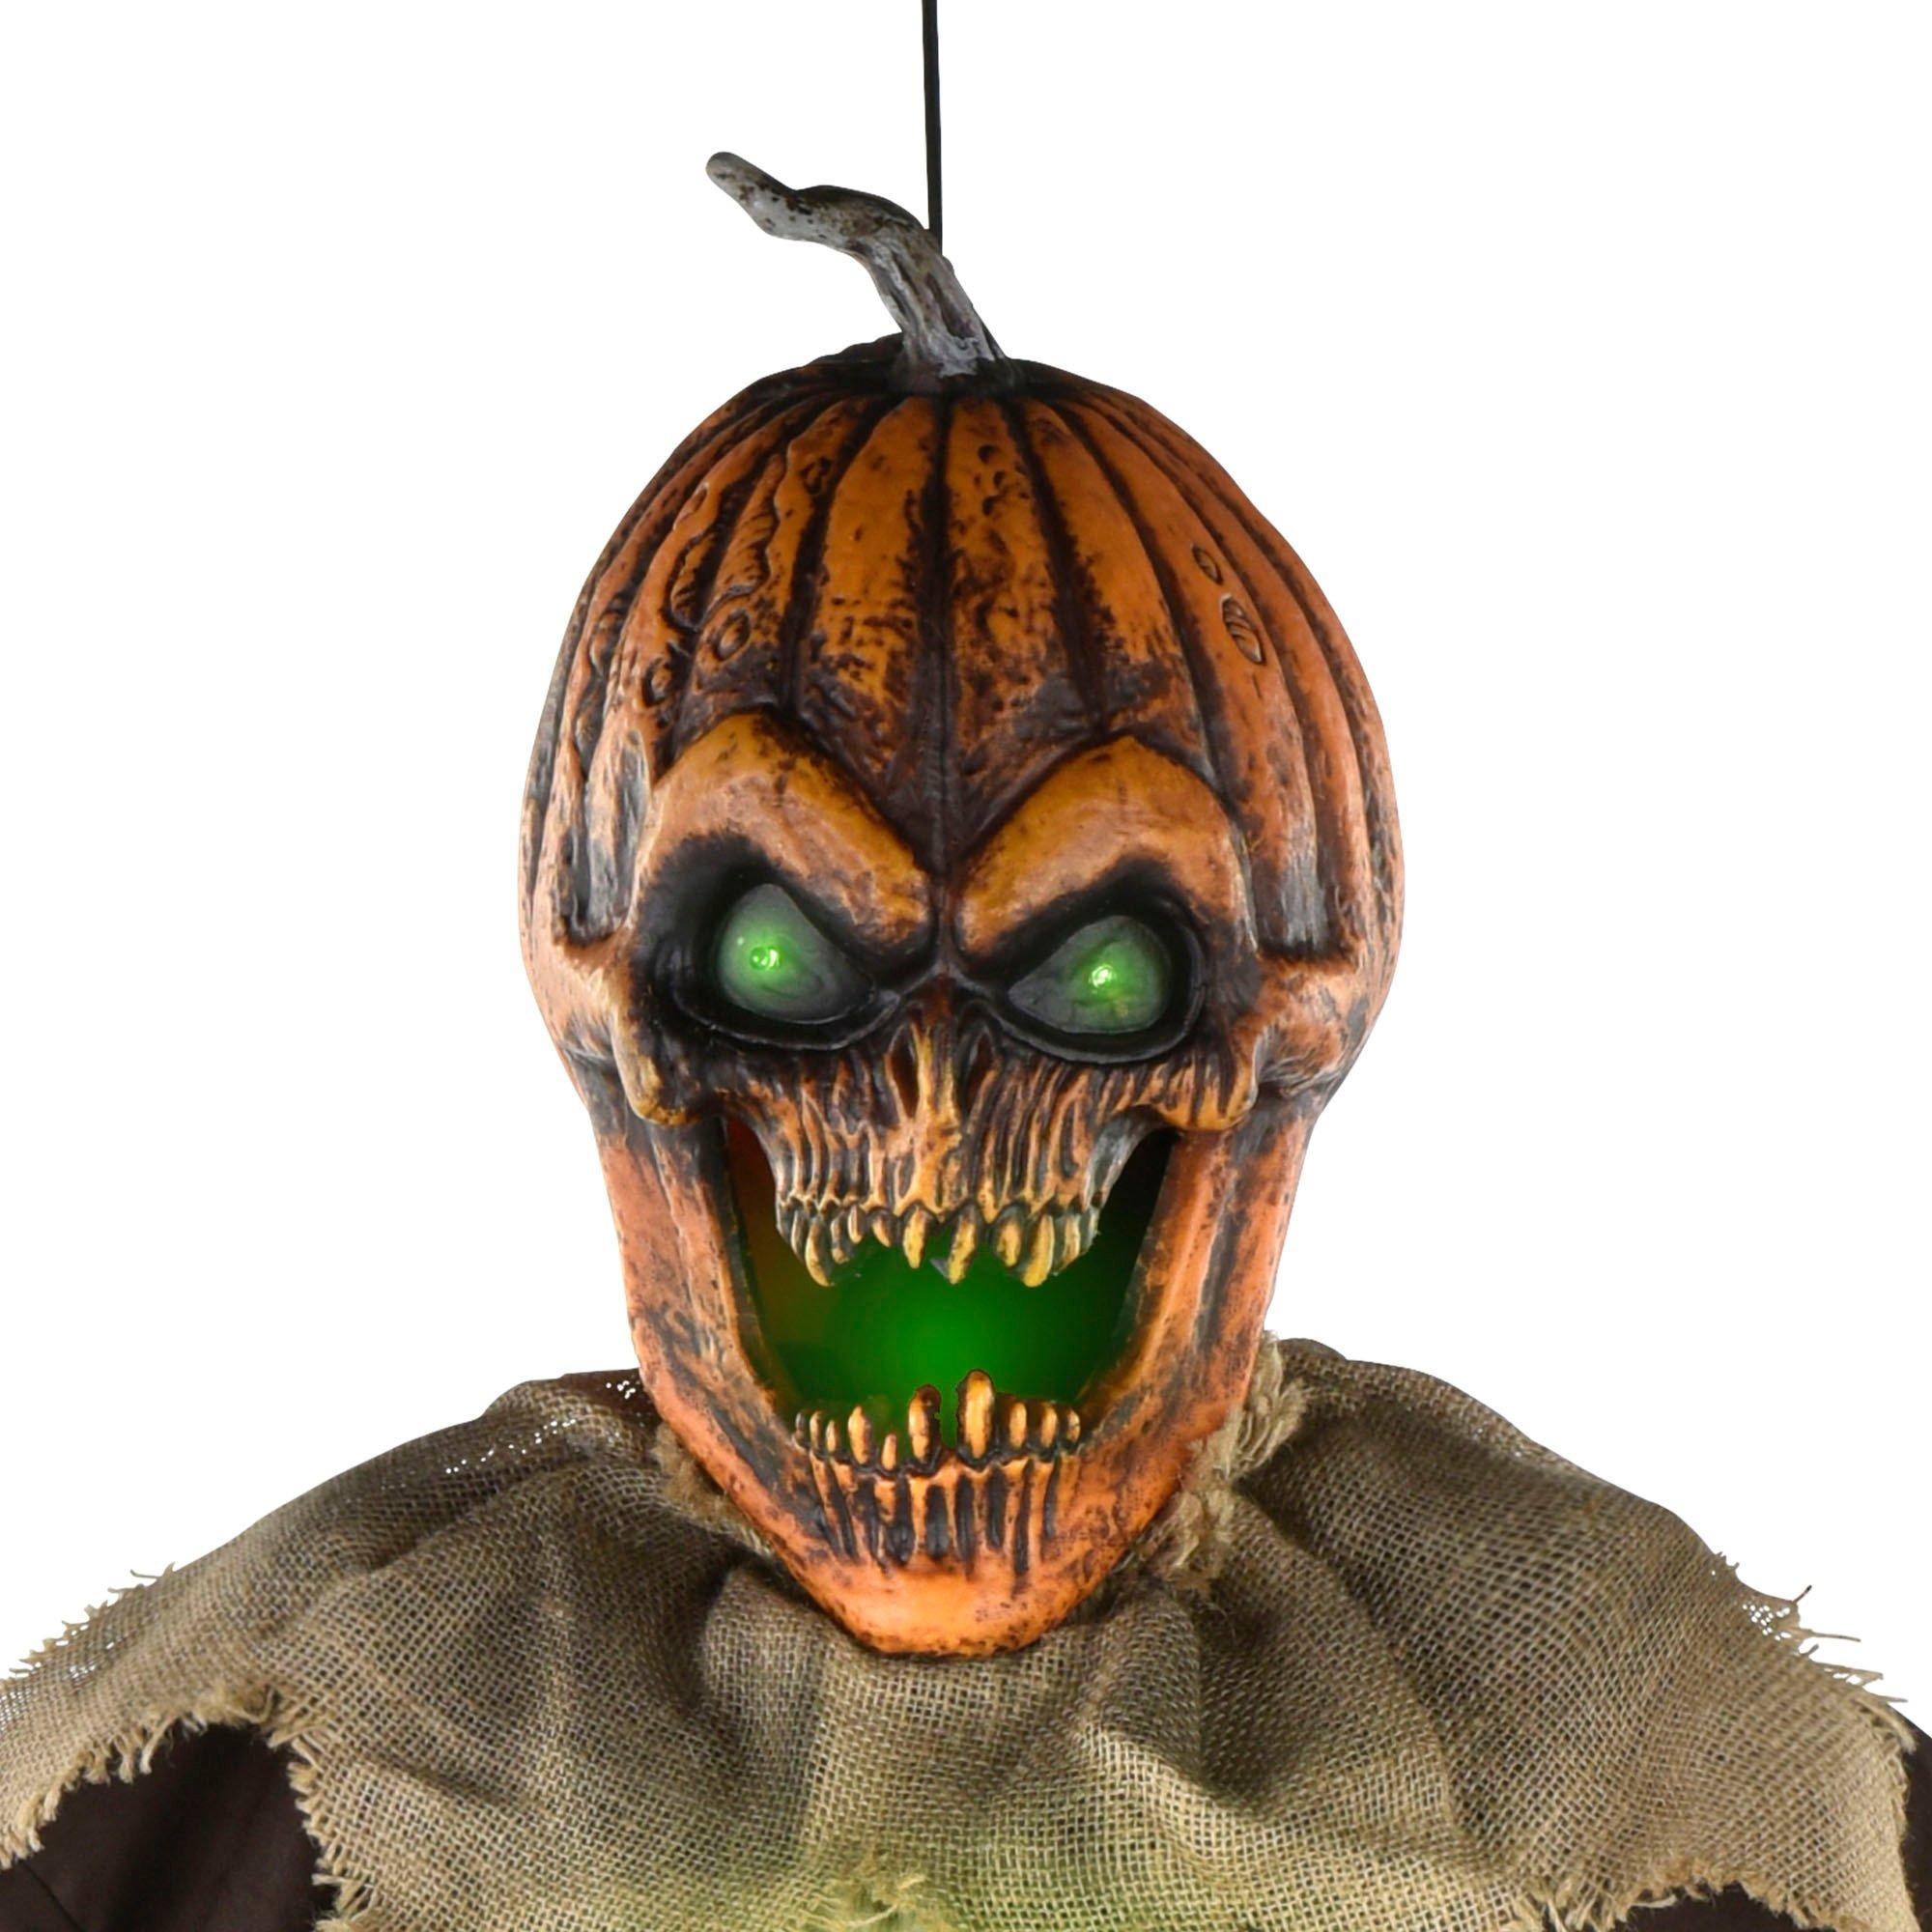 Scary Pumpkin Head Jack-O-Lantern Latex Mask - Halloween - Pumpkin Mask -  under $20